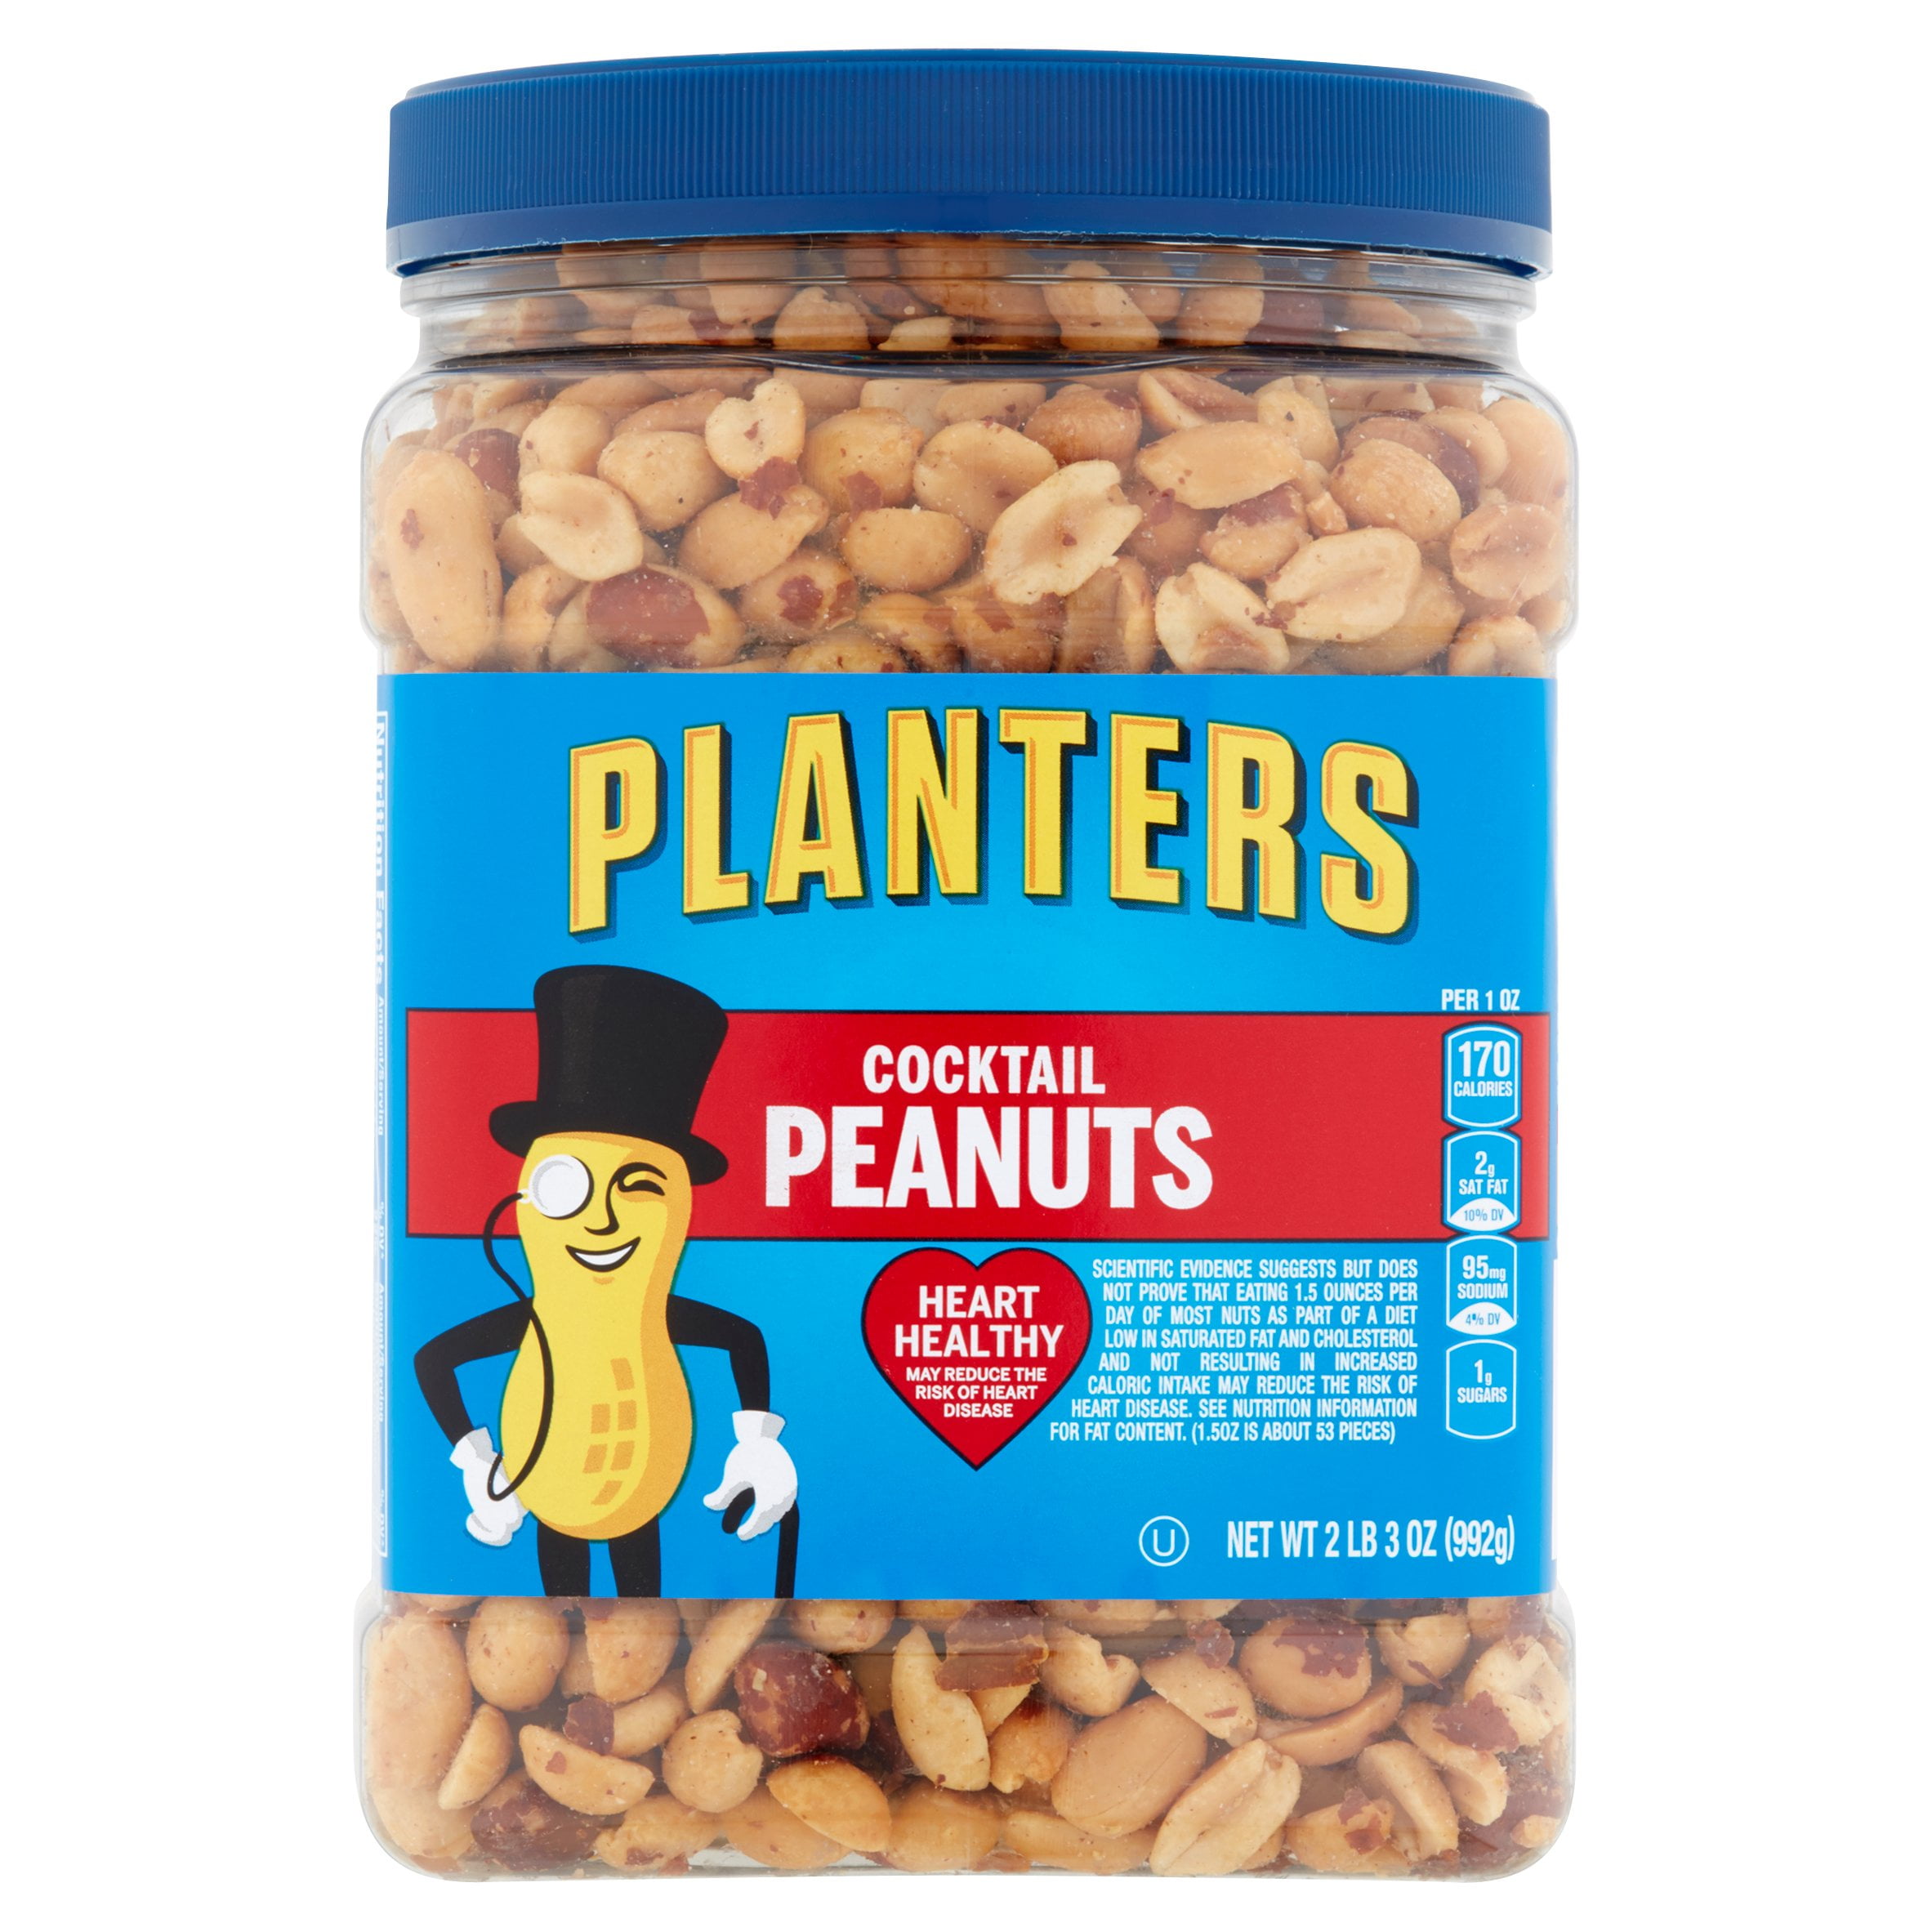 Planters Cocktail Peanuts, 35 Oz | eBay